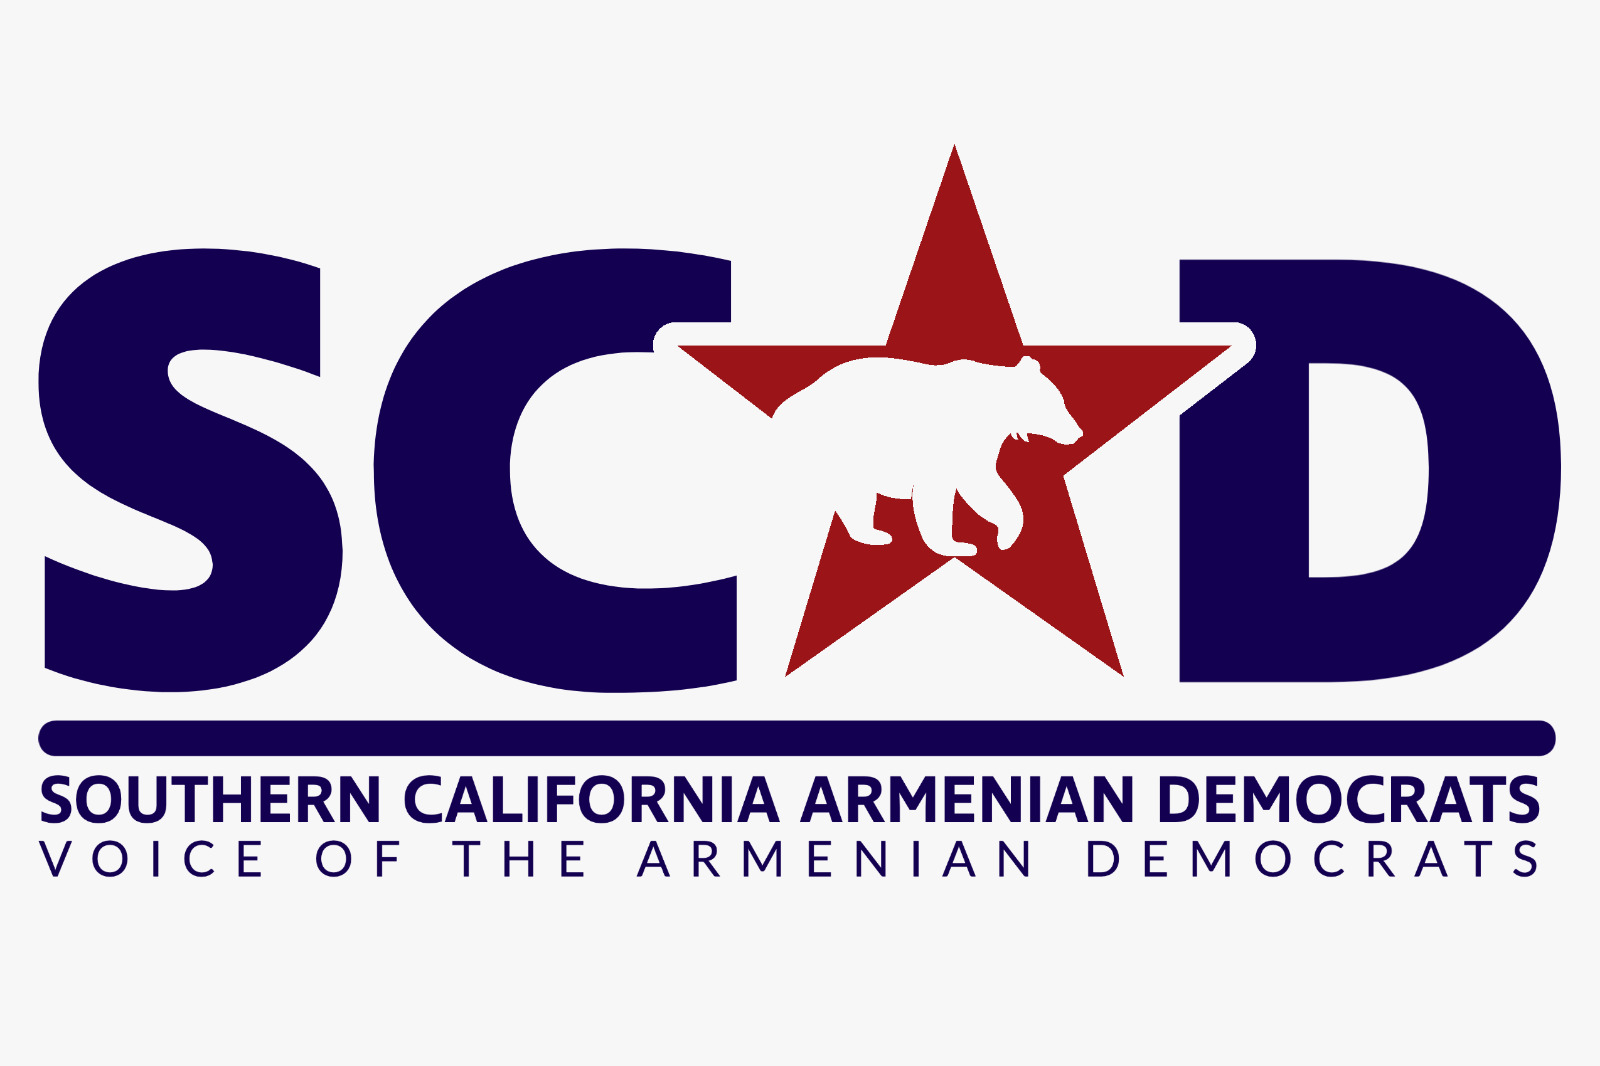 SOUTHERN CALIFORNIA ARMENIAN DEMOCRATS